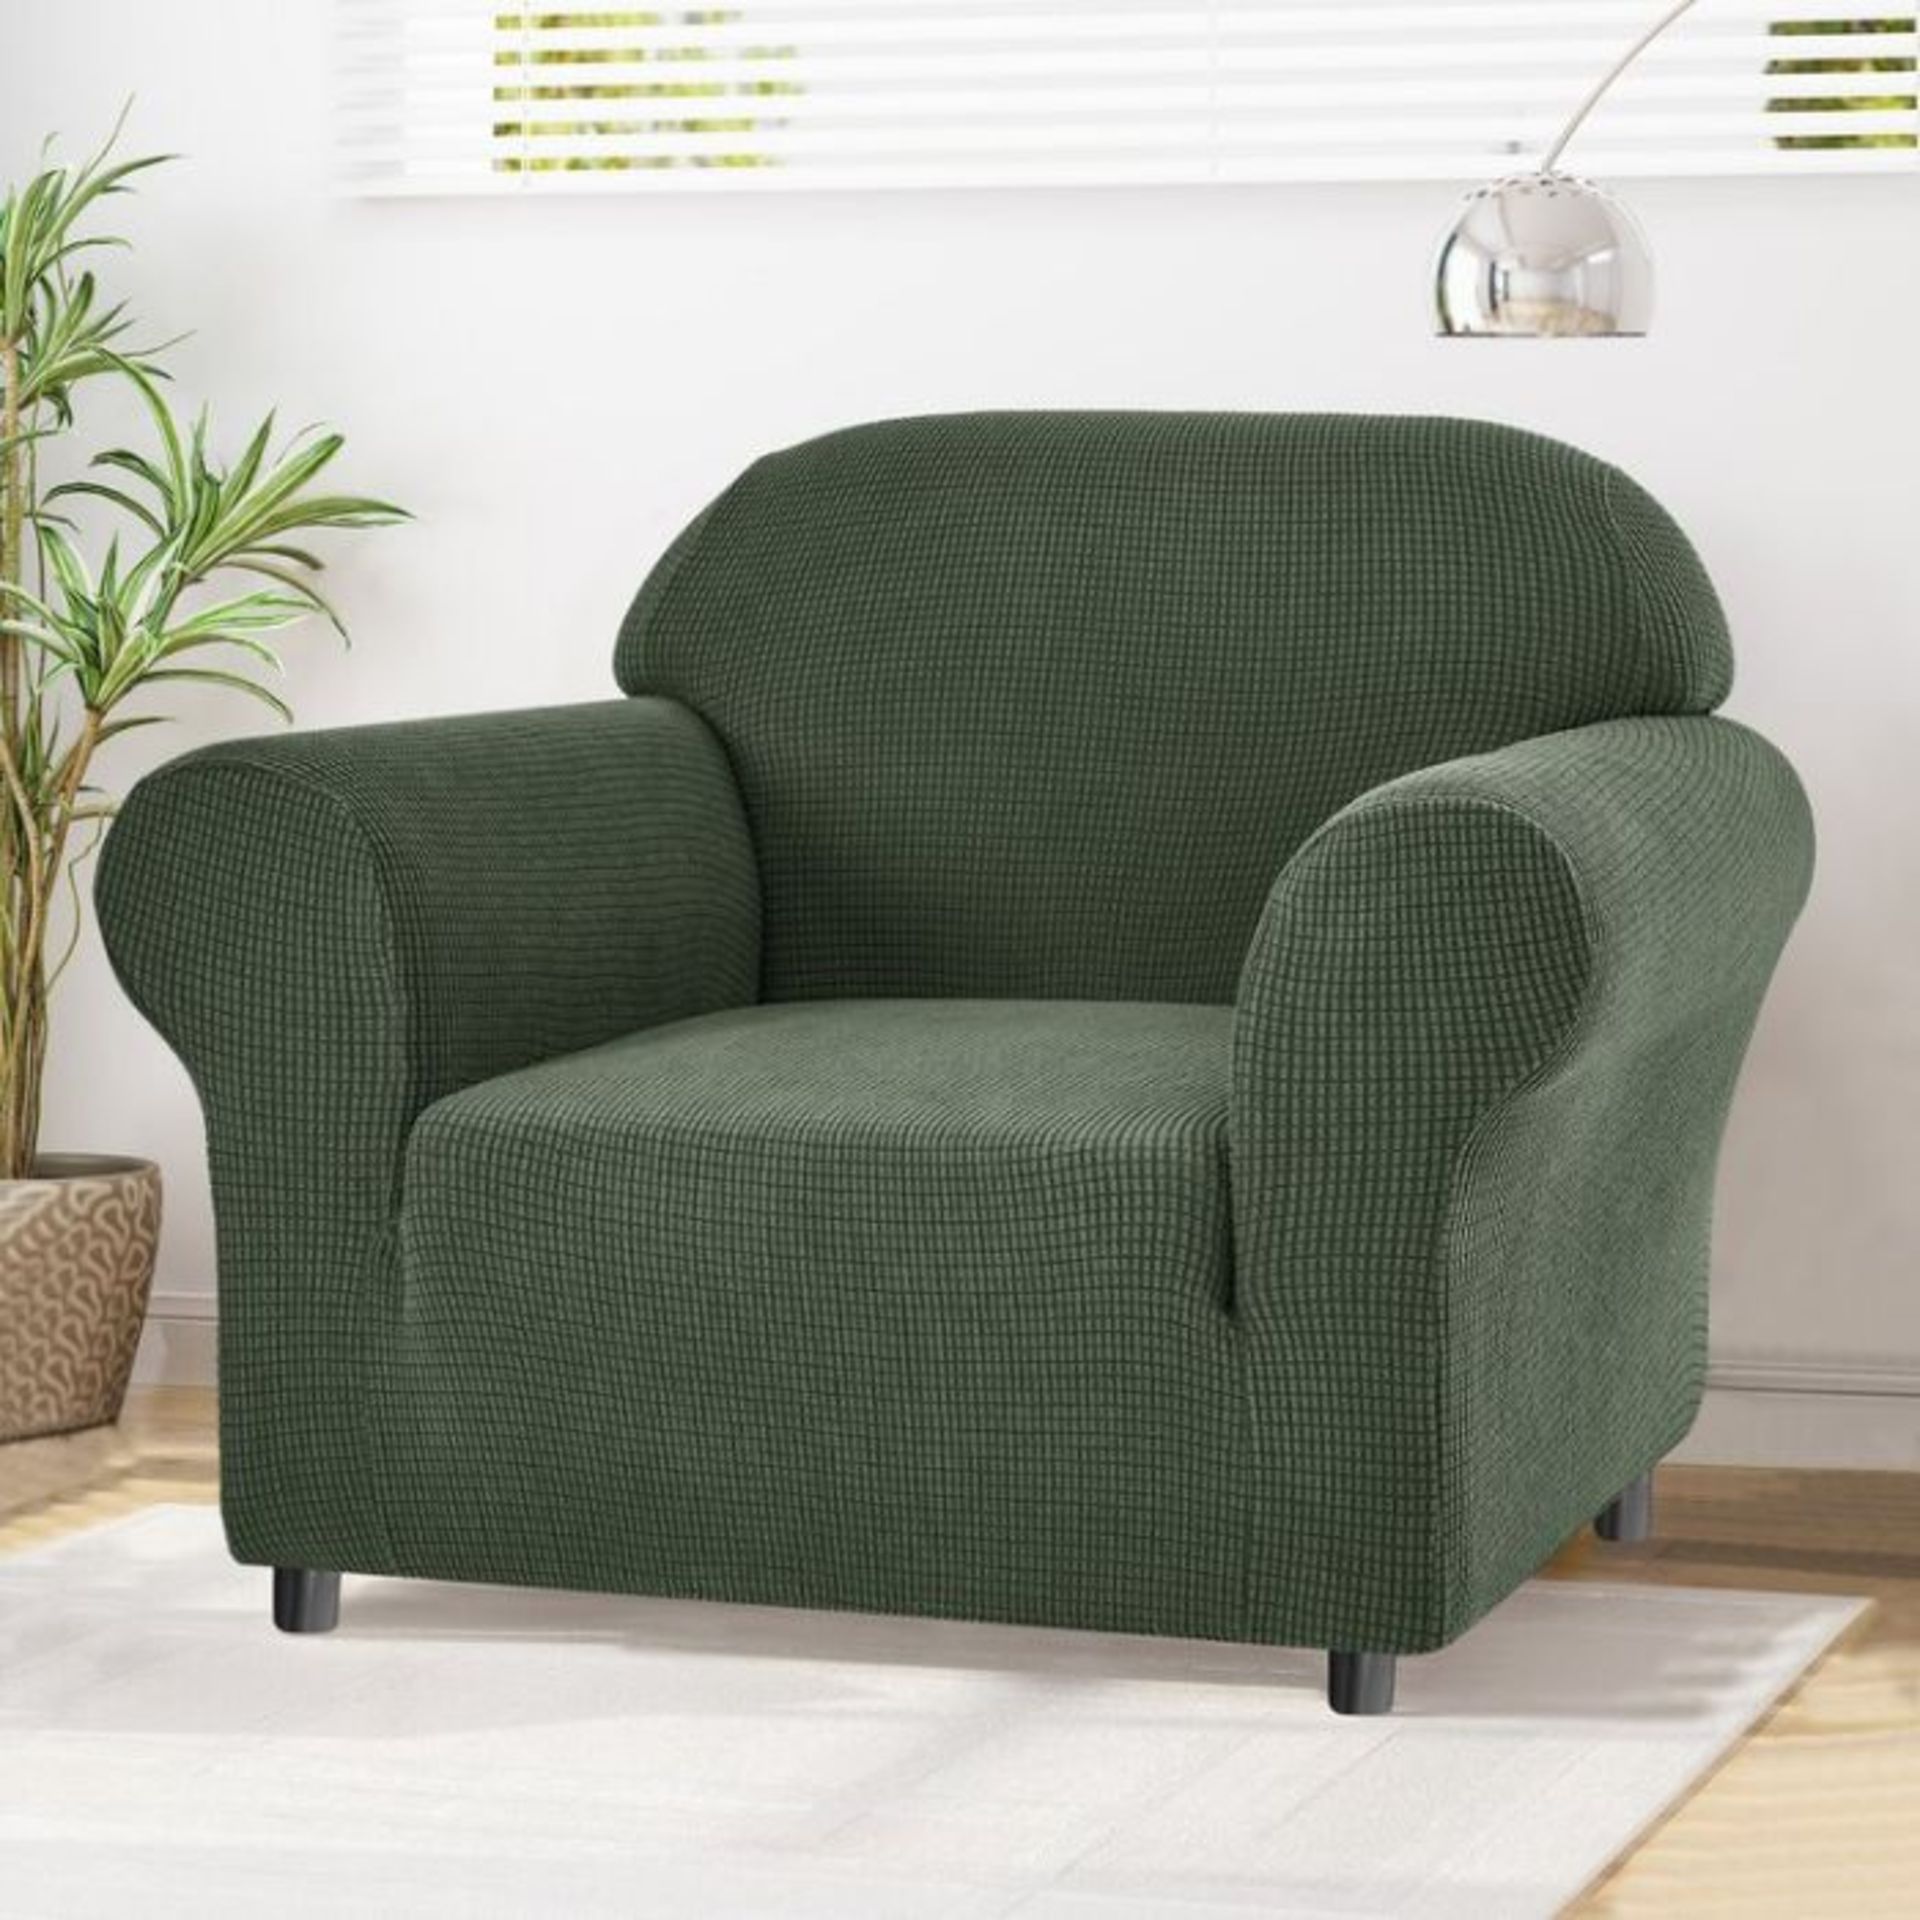 Rosalind Wheeler, Jacquard High Stretch Box Cushion Chair Slipcover (OLIVE GREEN) (41cm H X 47cm W X